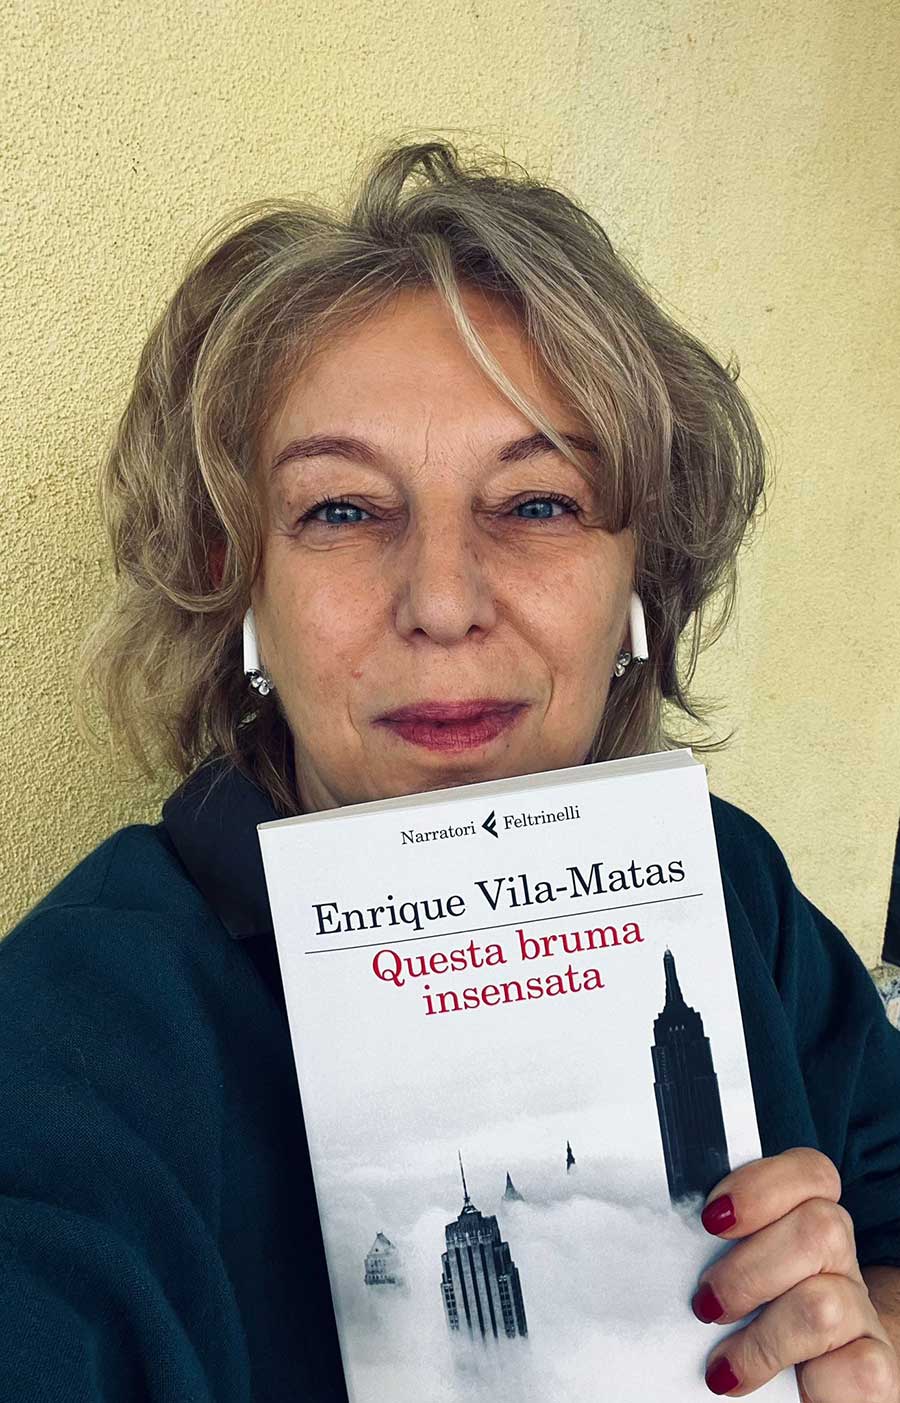 Elena Liverani, traductora de V-M en italiano